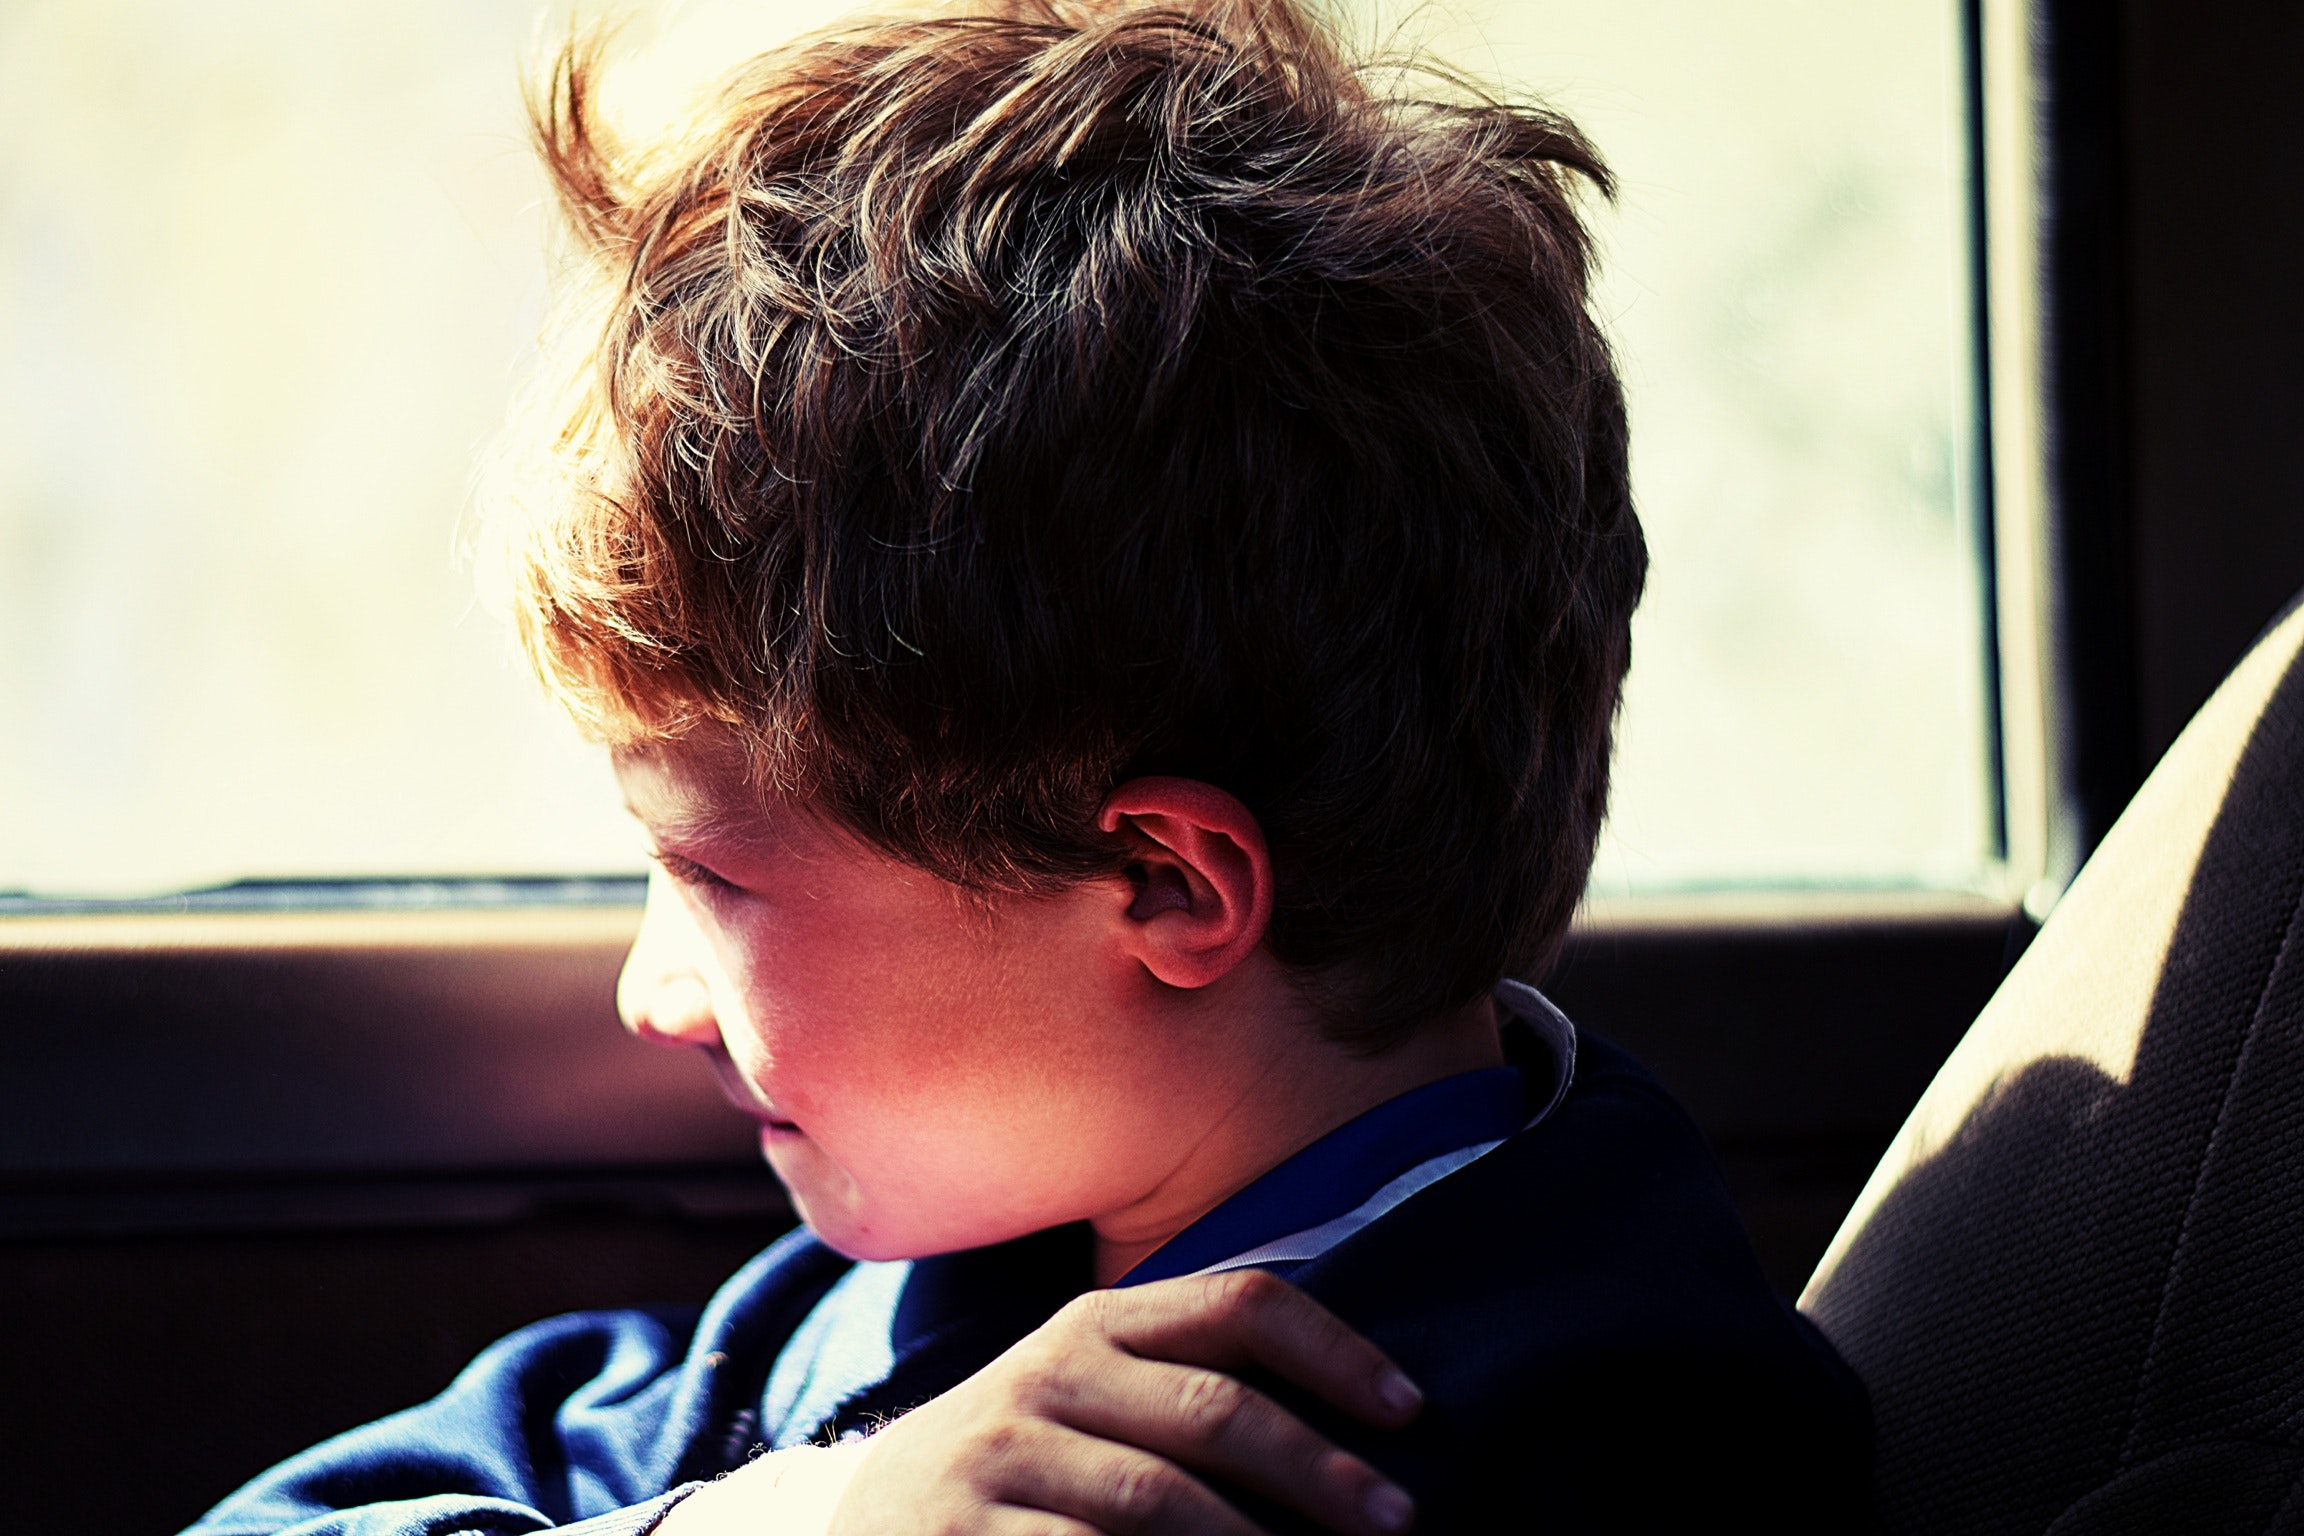 Boy in blue jacket sitting next to vehicle window photo